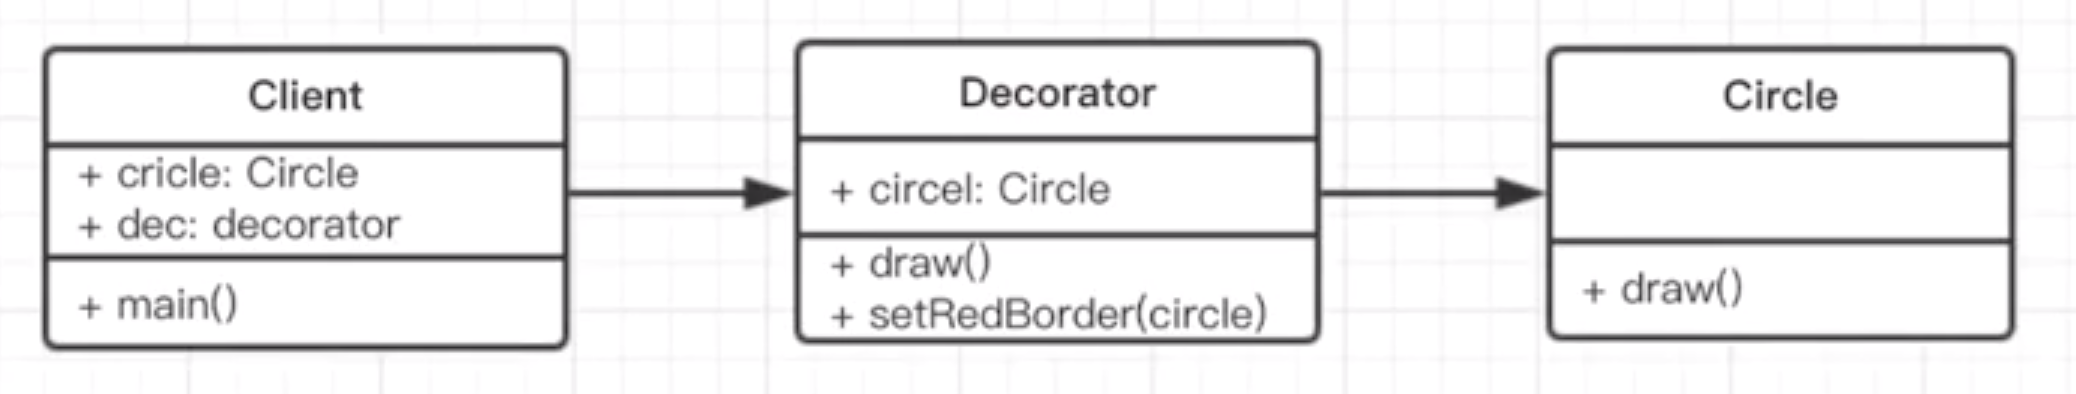 js-decorator-pattern.png